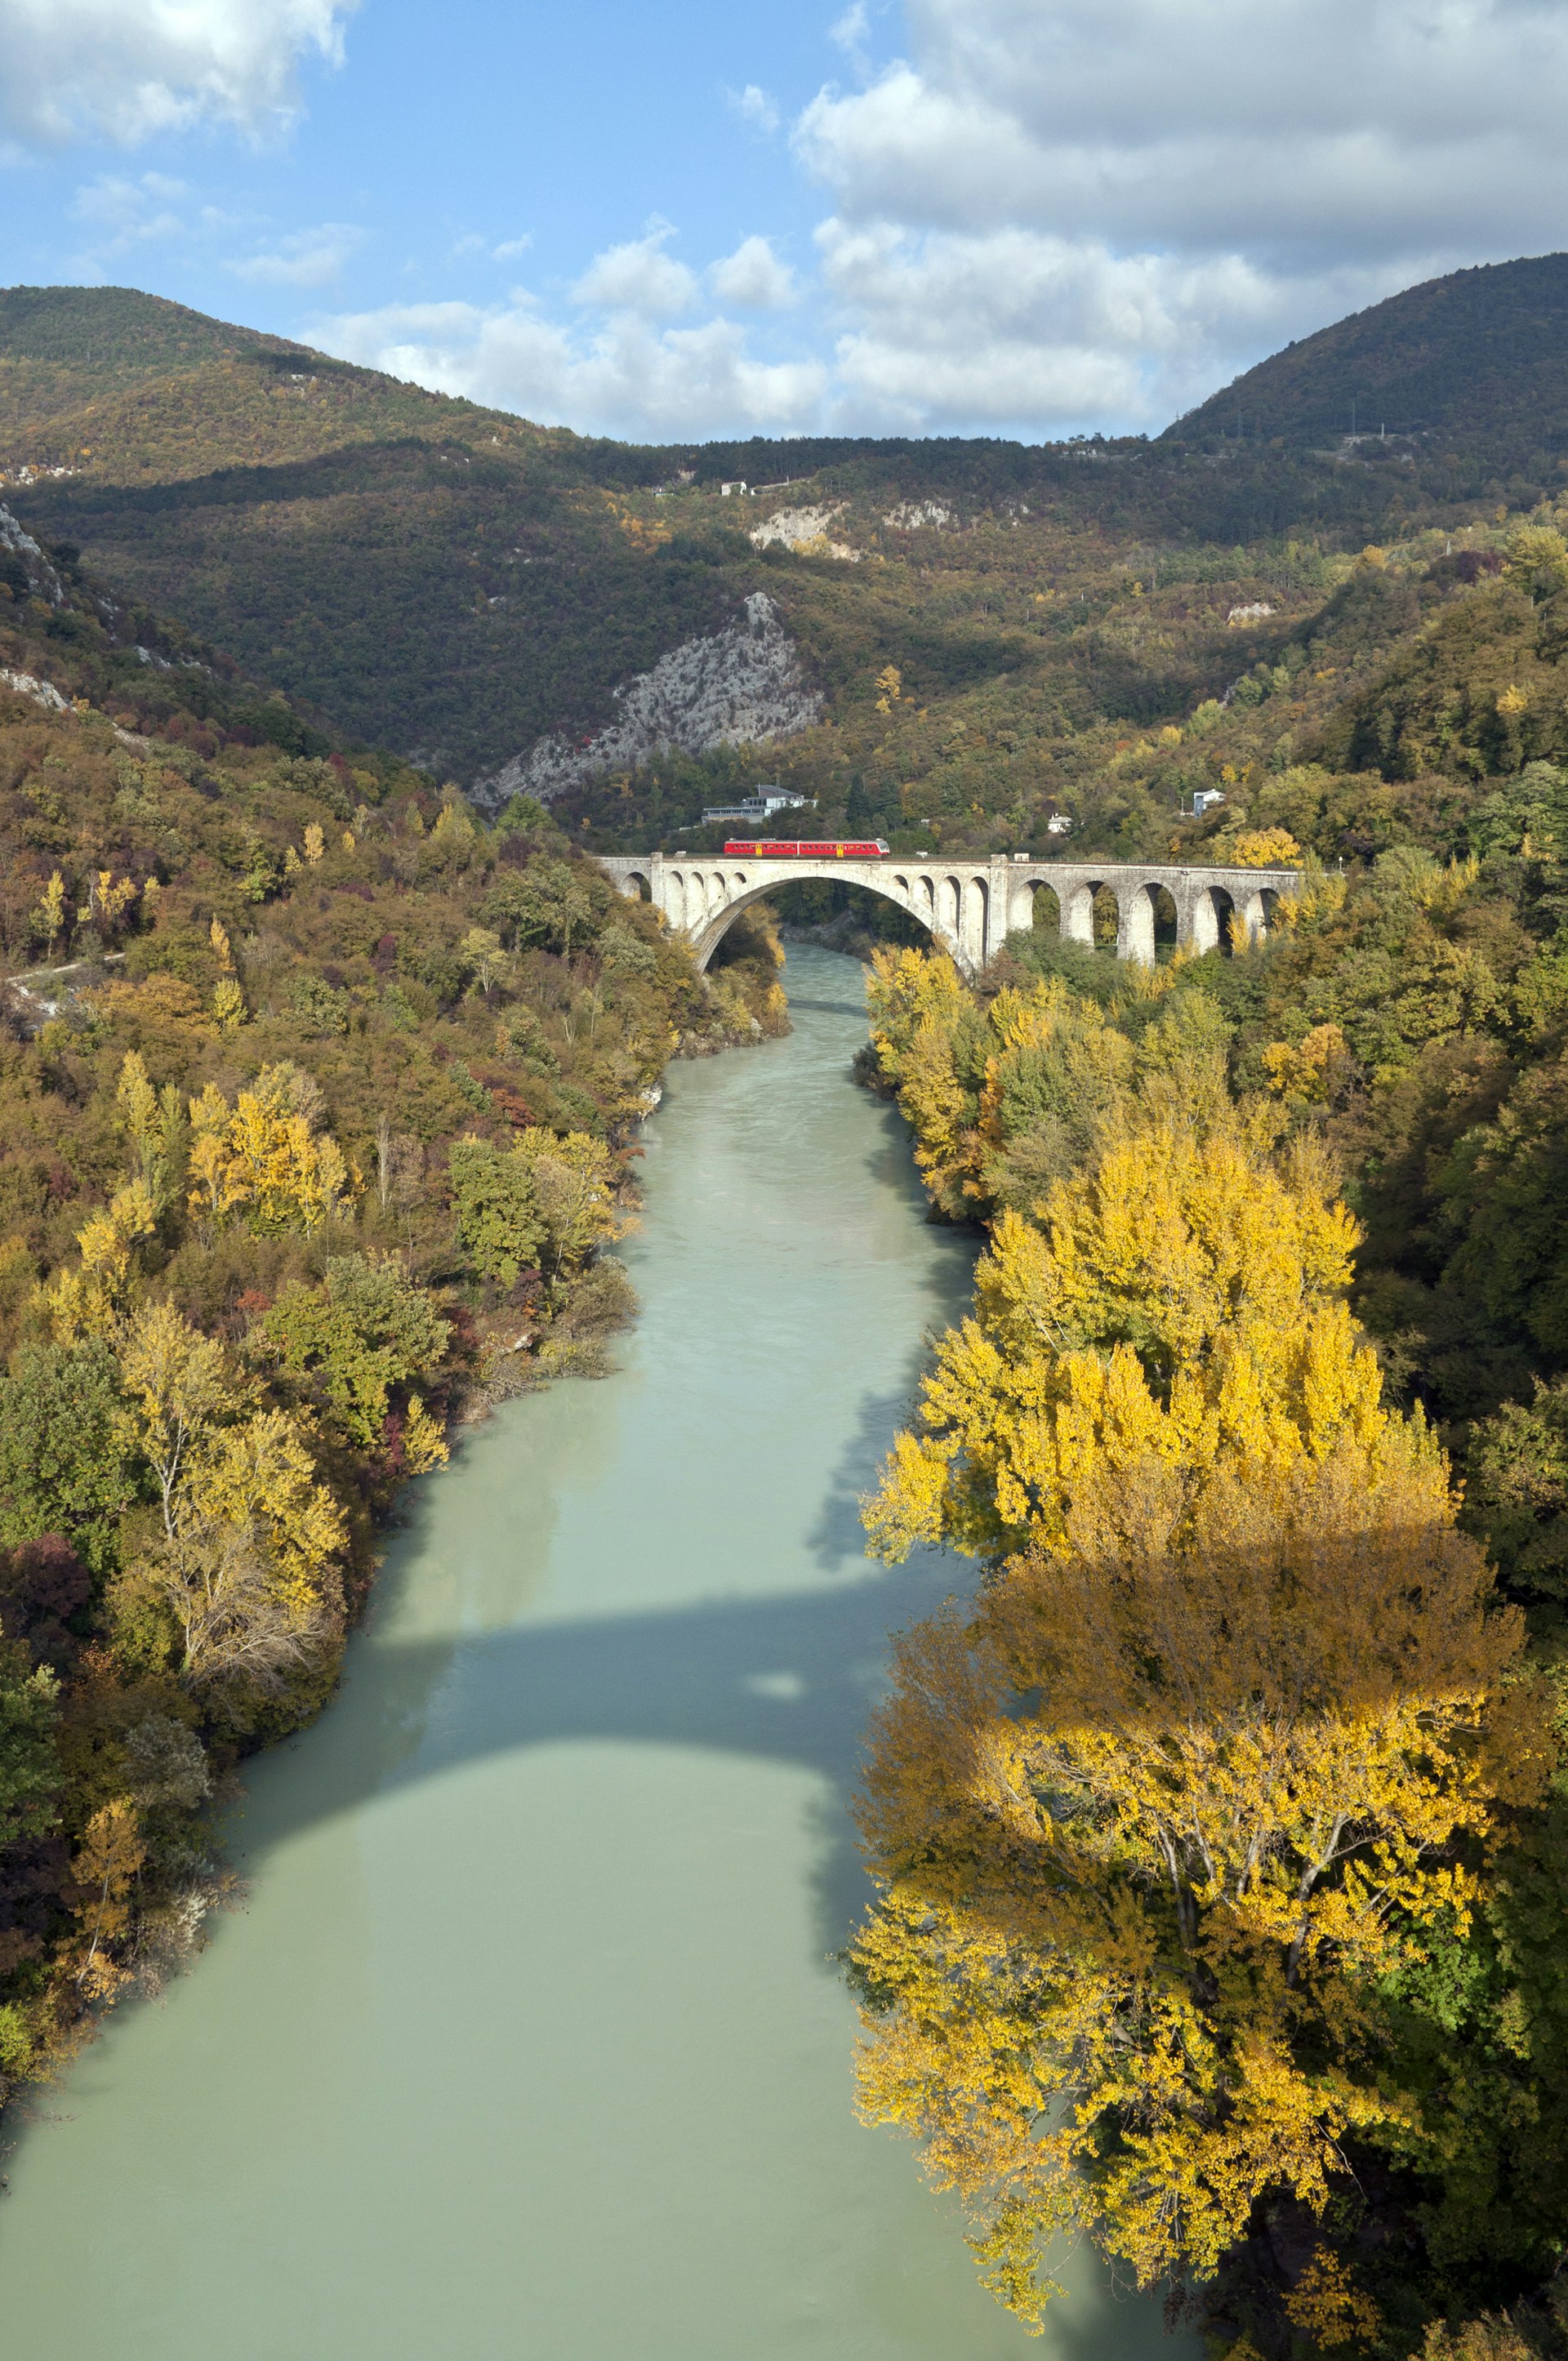 A train crosses a stone bridge over a fast-flowing river